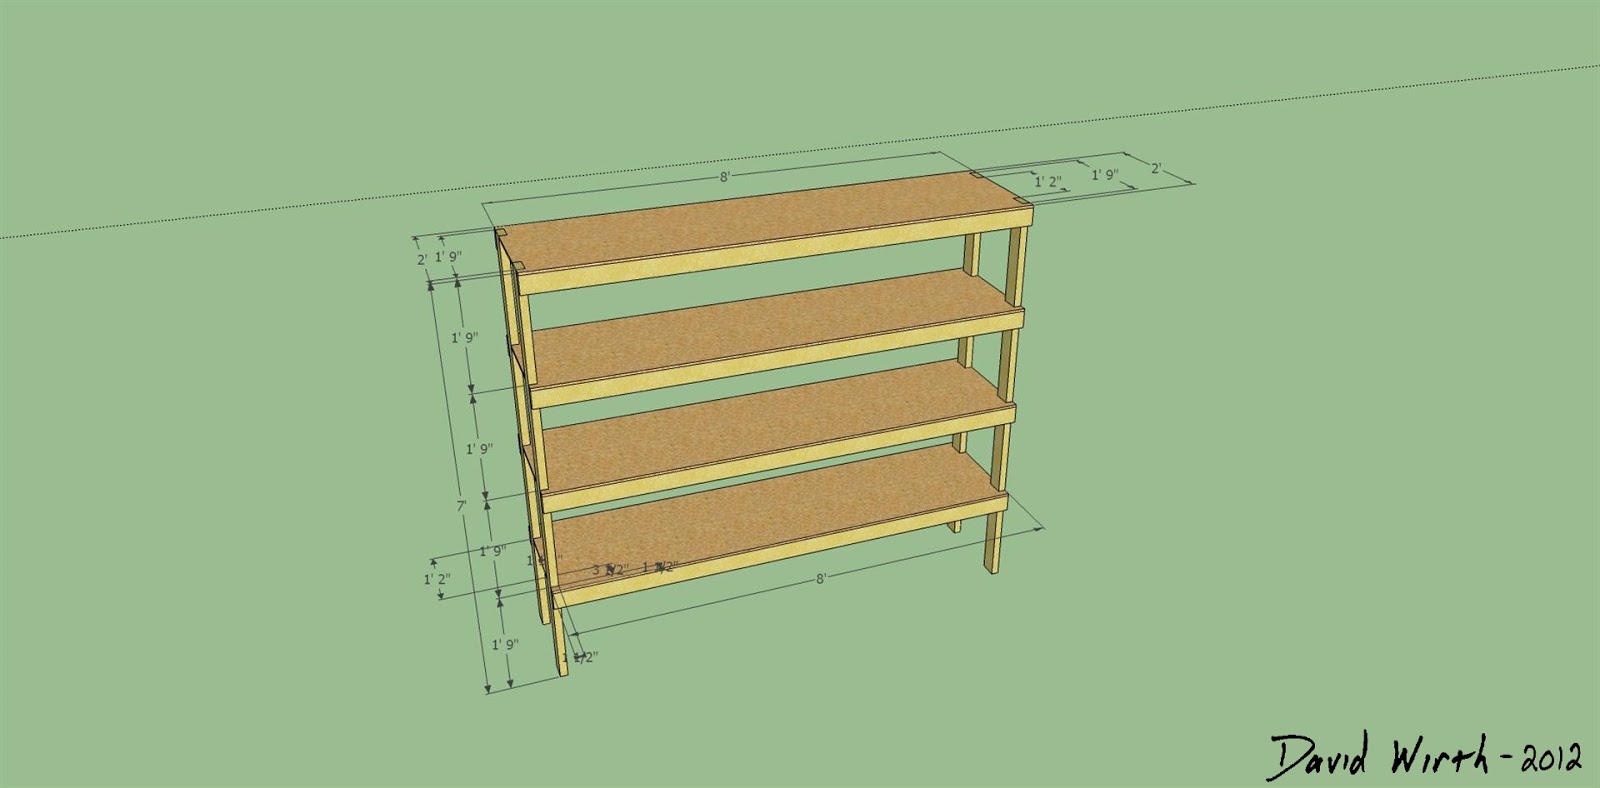 ... notes # garage shelf # garage shelving # how to build a garage shelf